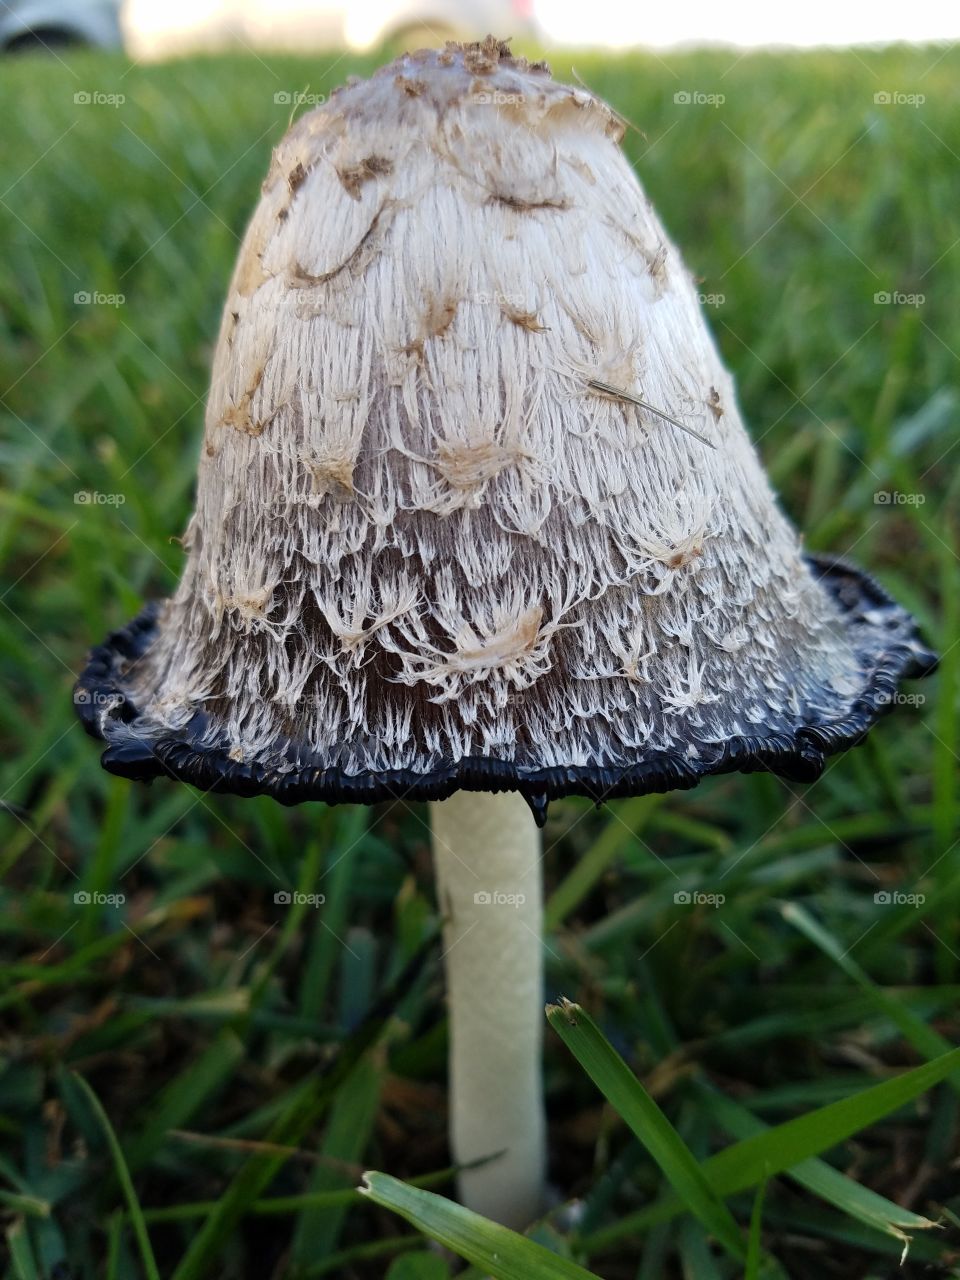 A close up of a mushroom